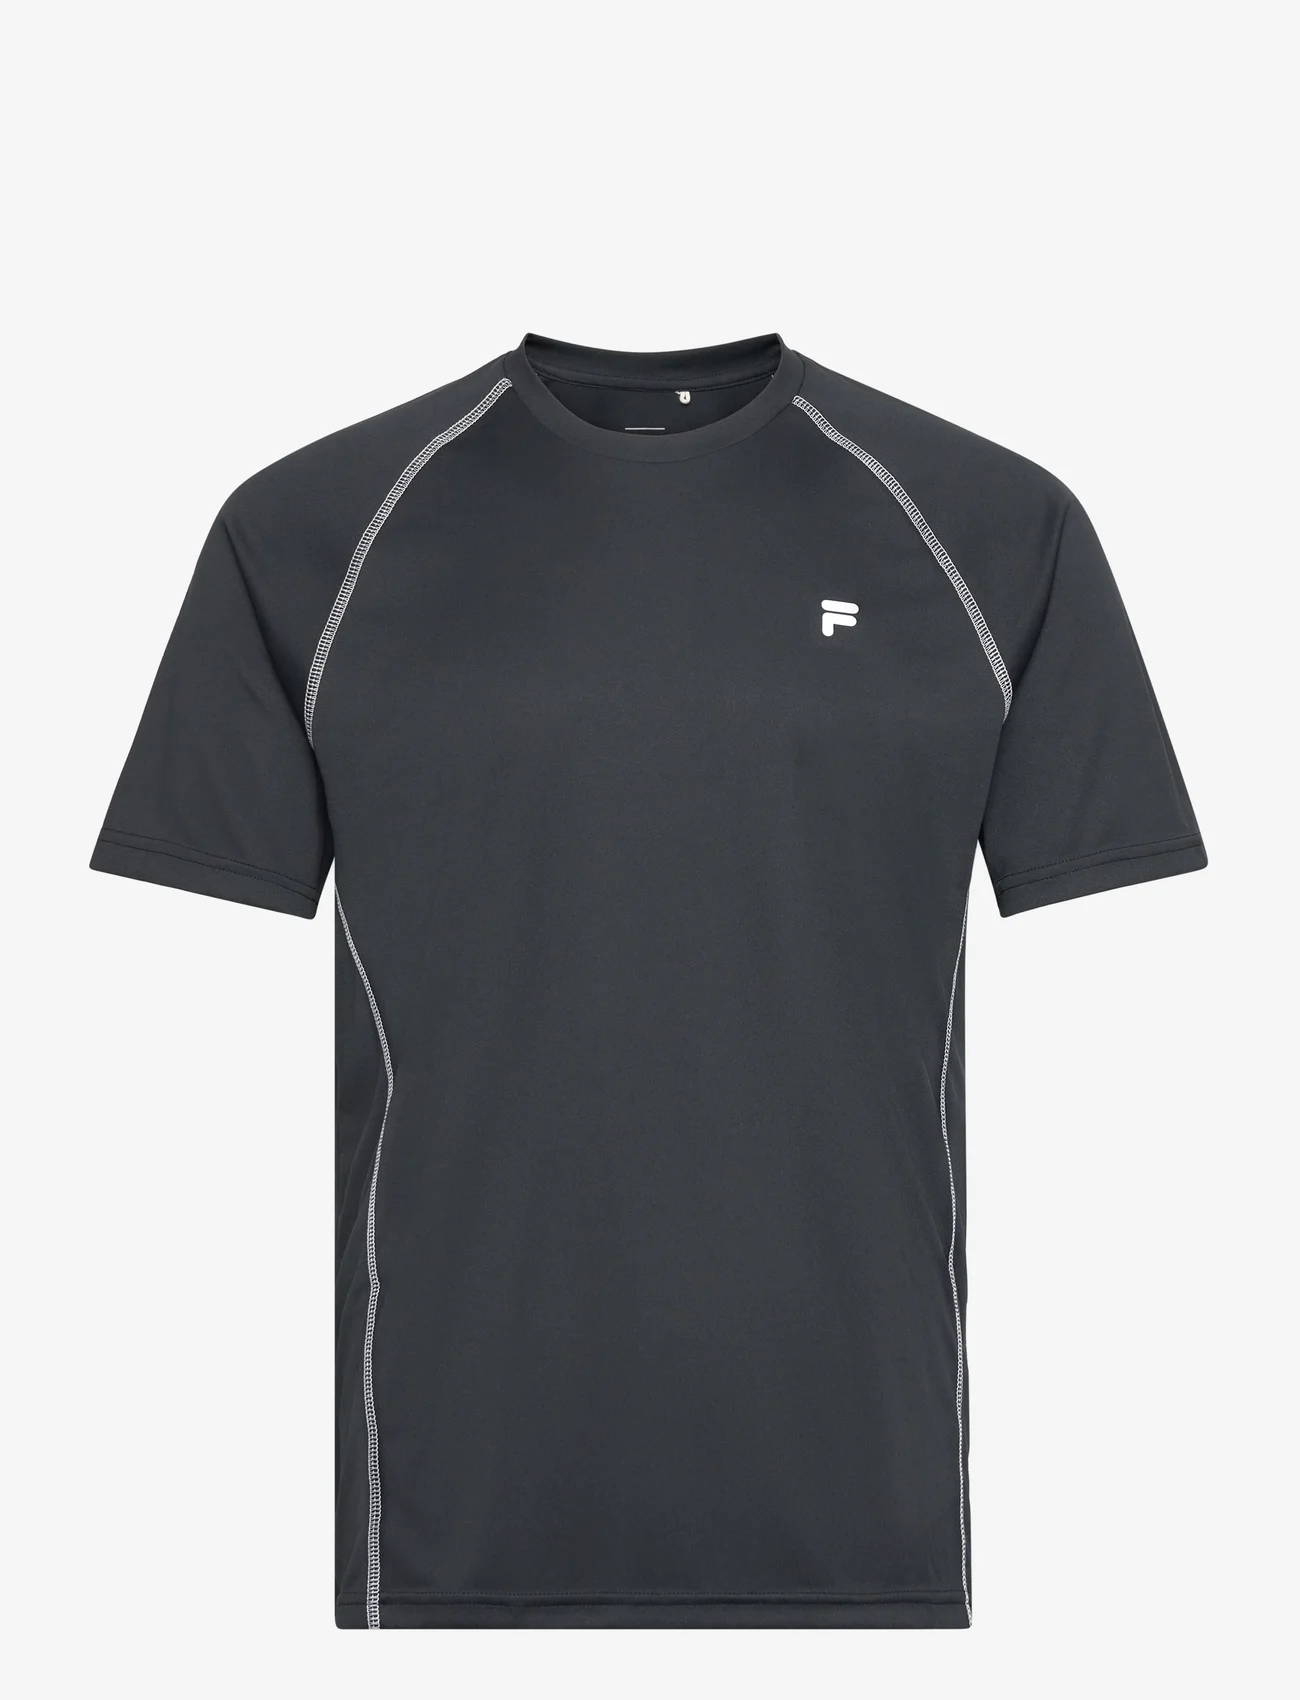 FILA - LEXOW raglan tee - short-sleeved t-shirts - black - 0